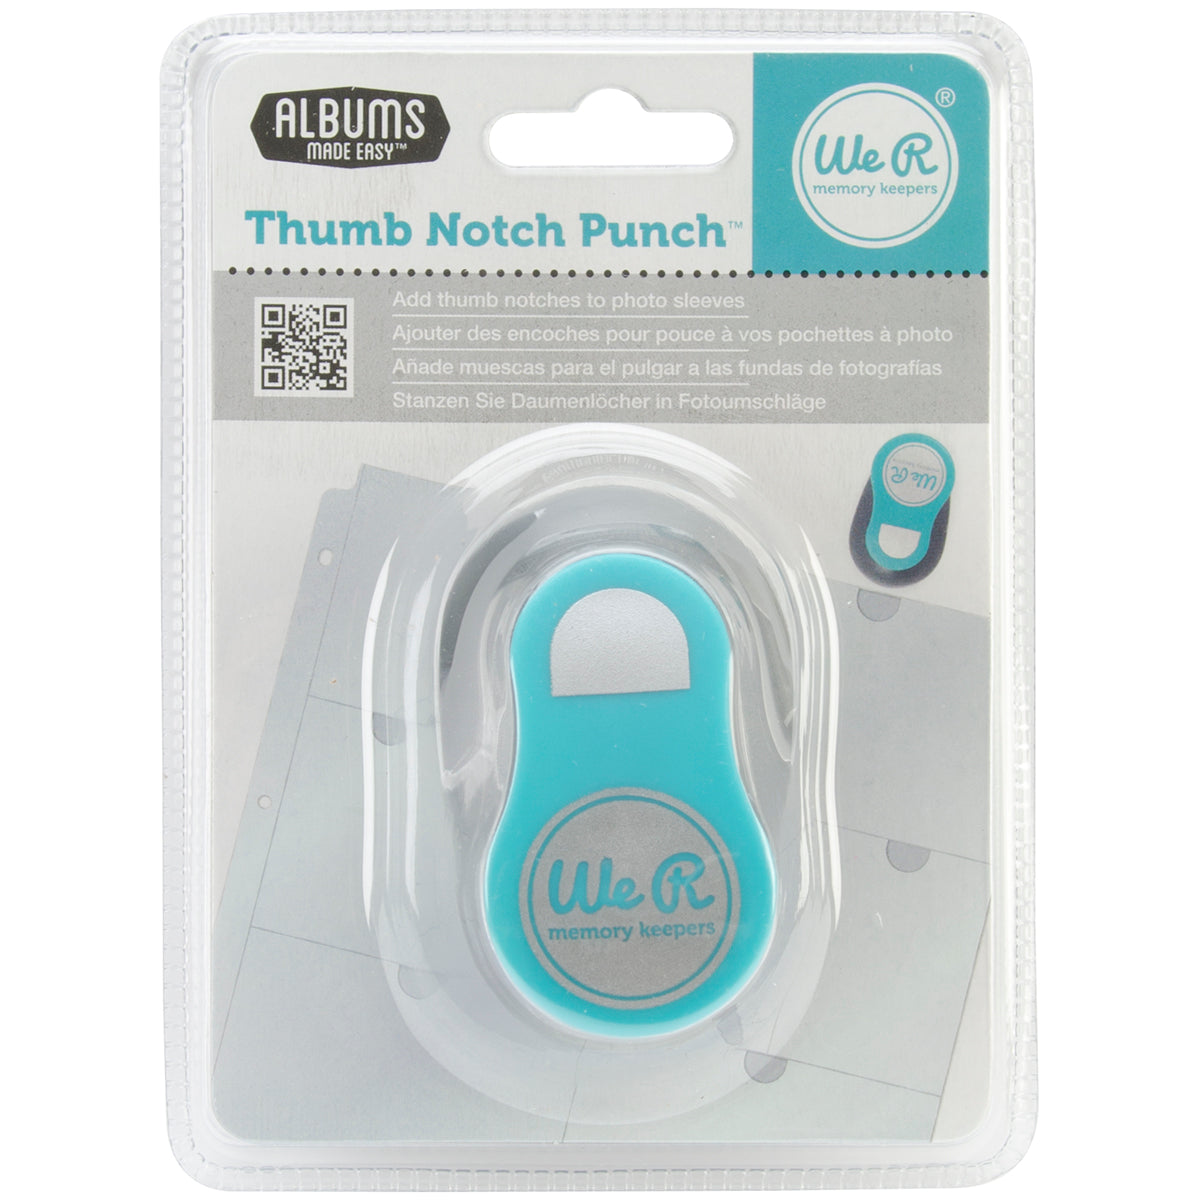 Thumb Notch Punch